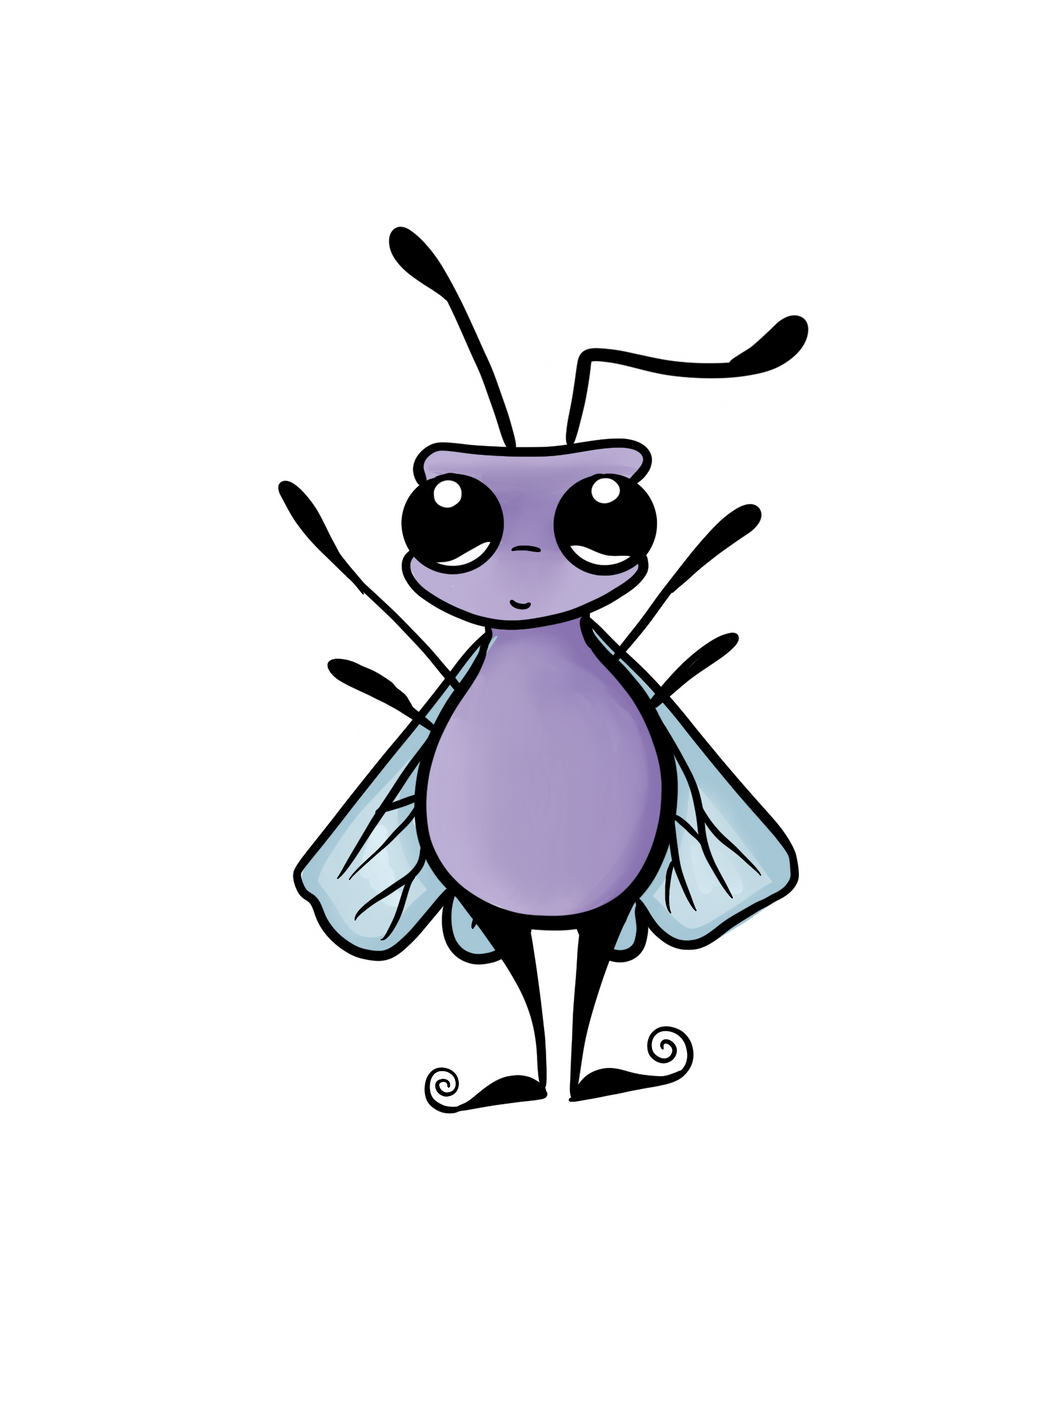 Doodlebug Hug Sticker